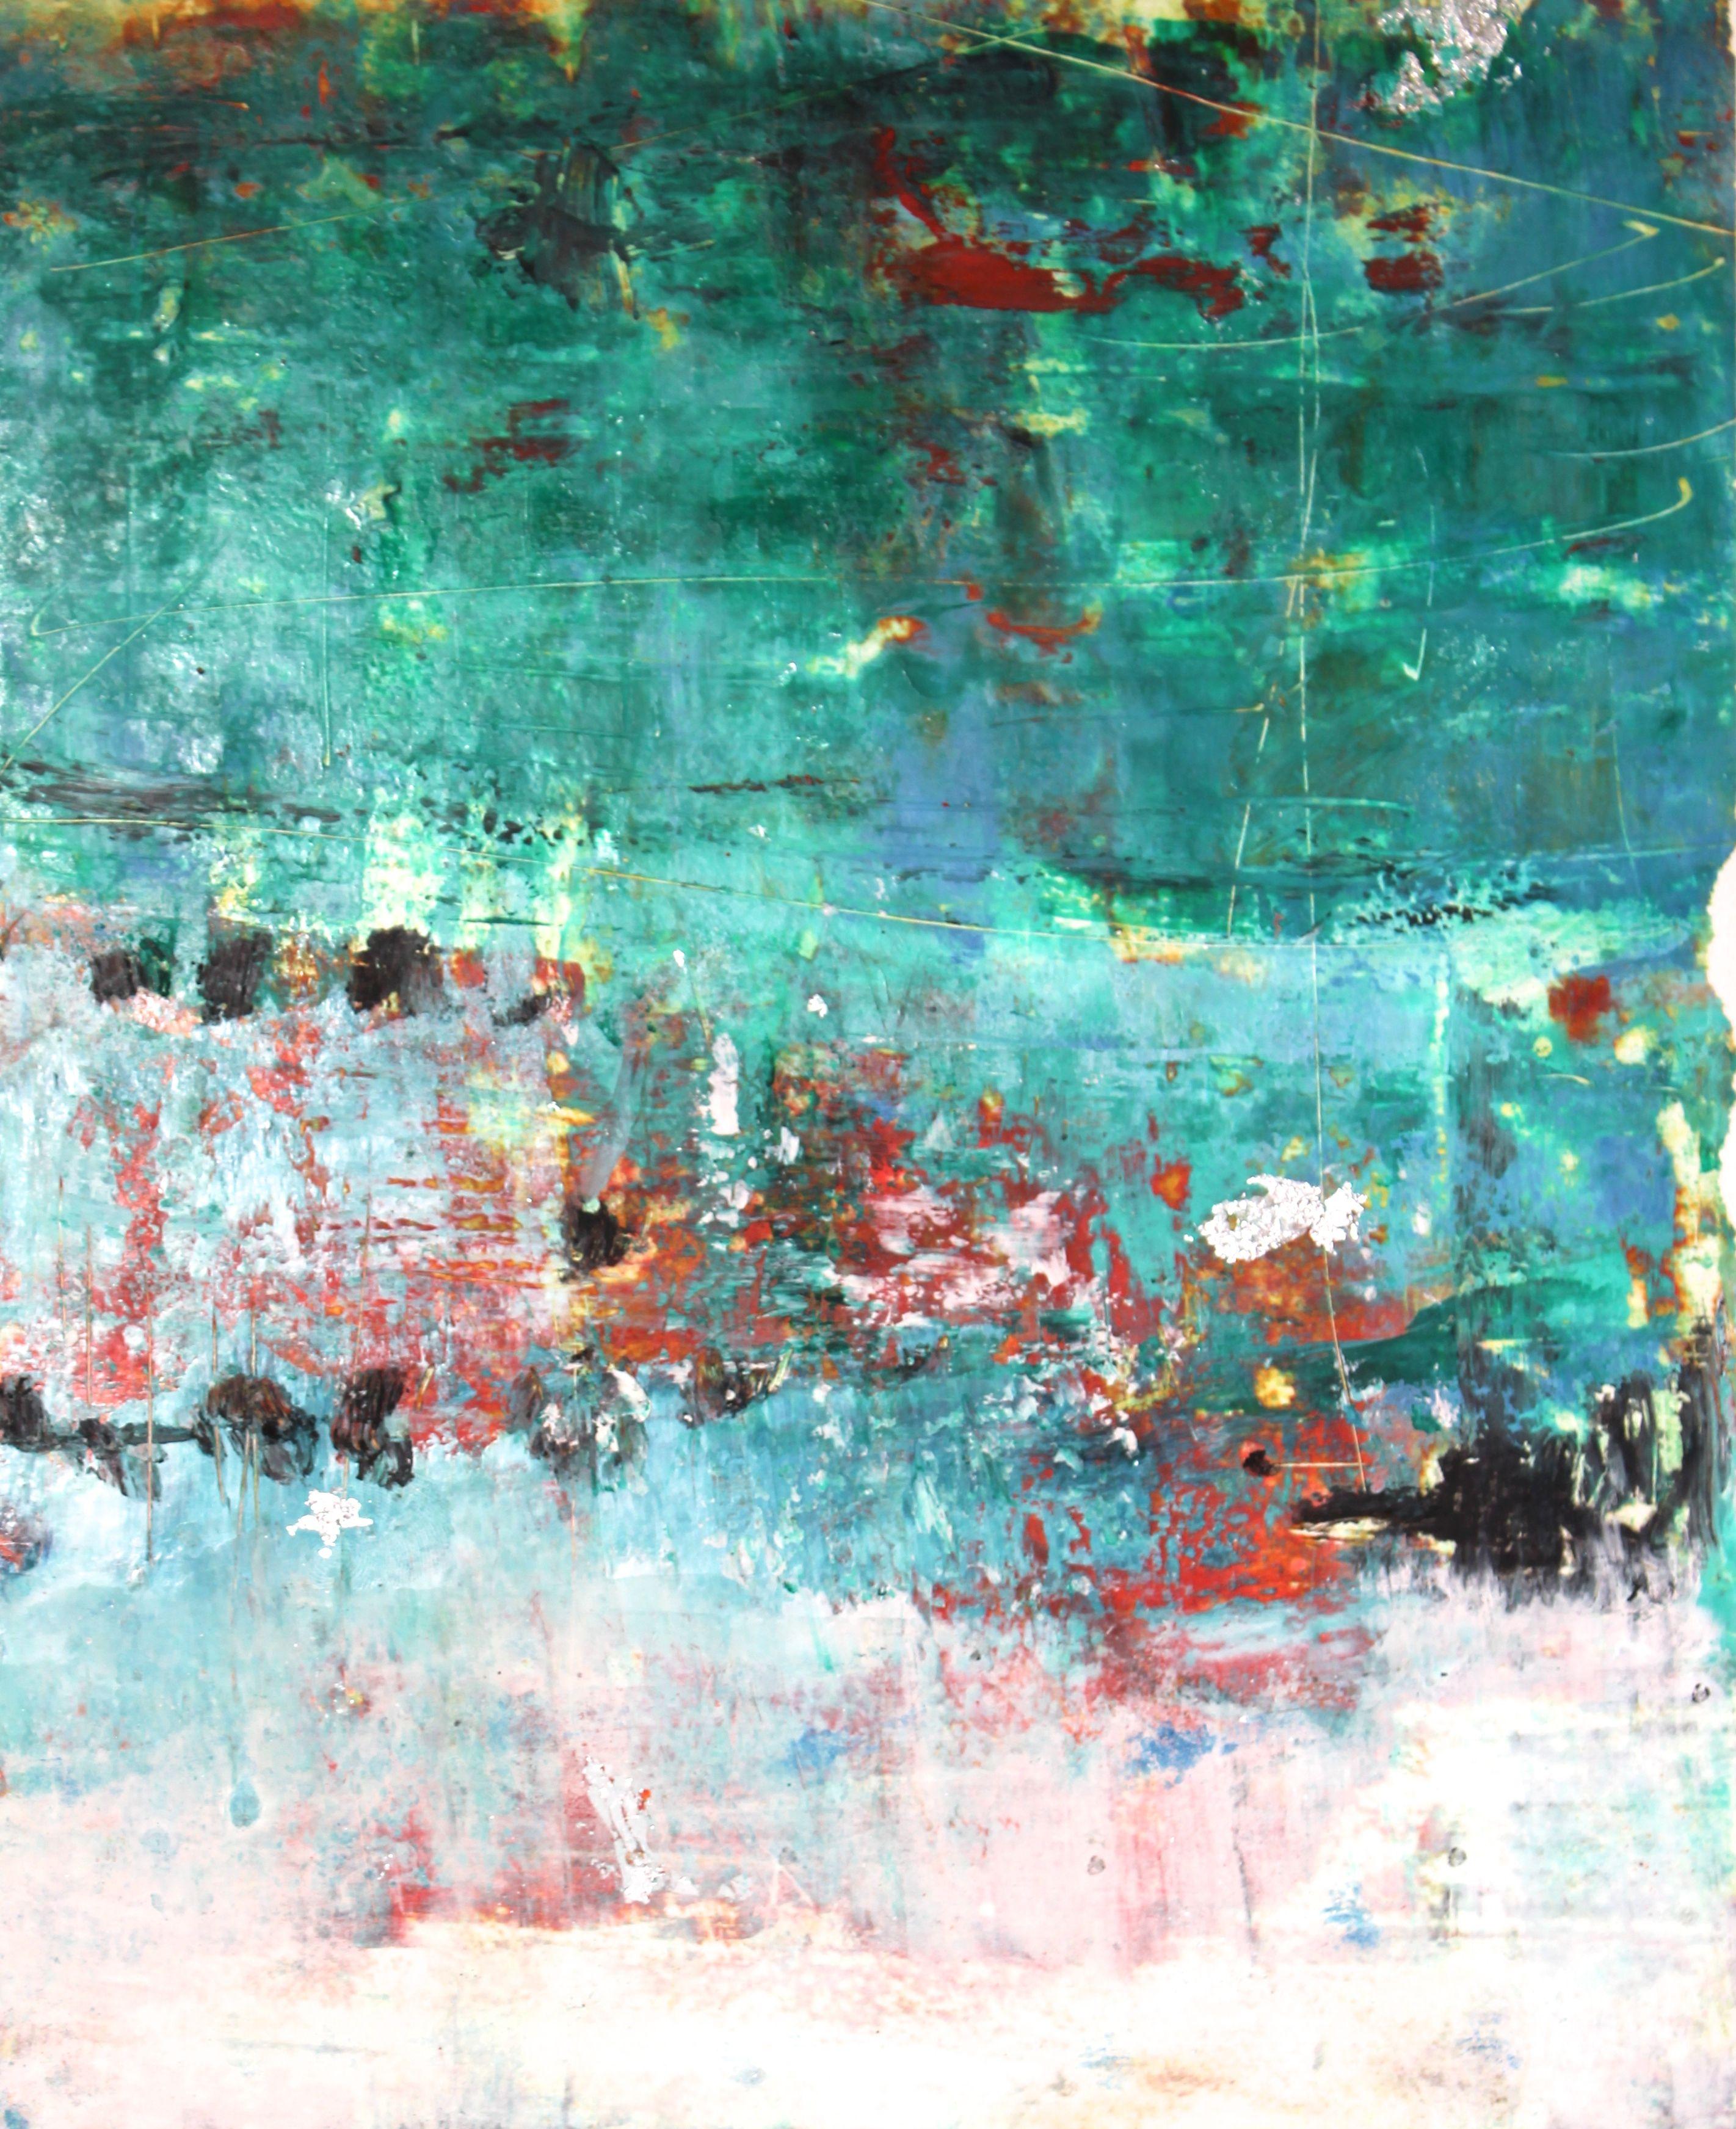 Abstract Painting Laura Spring - Turquoise monde 2, peinture, huile sur papier